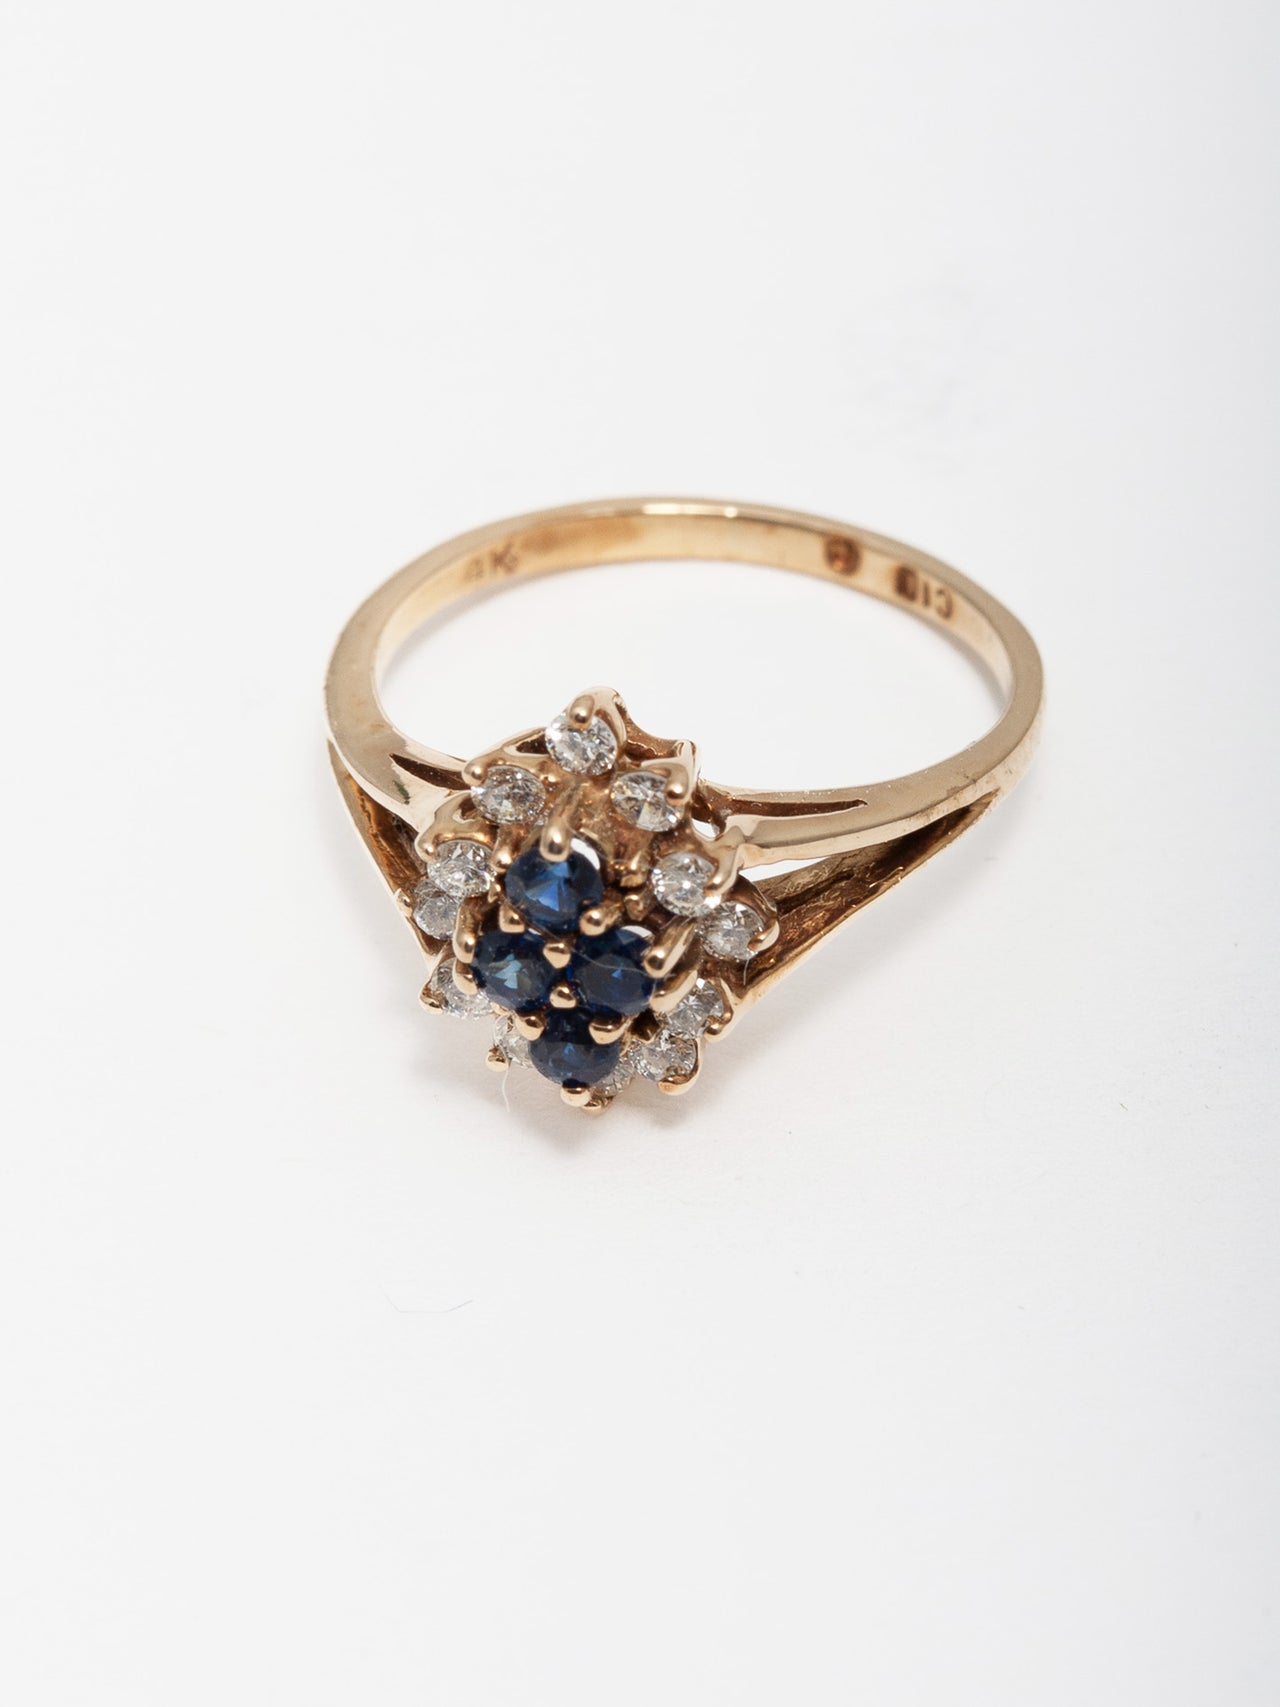 14kt Yellow Gold Diamond & Sapphire Ring shot on white background.